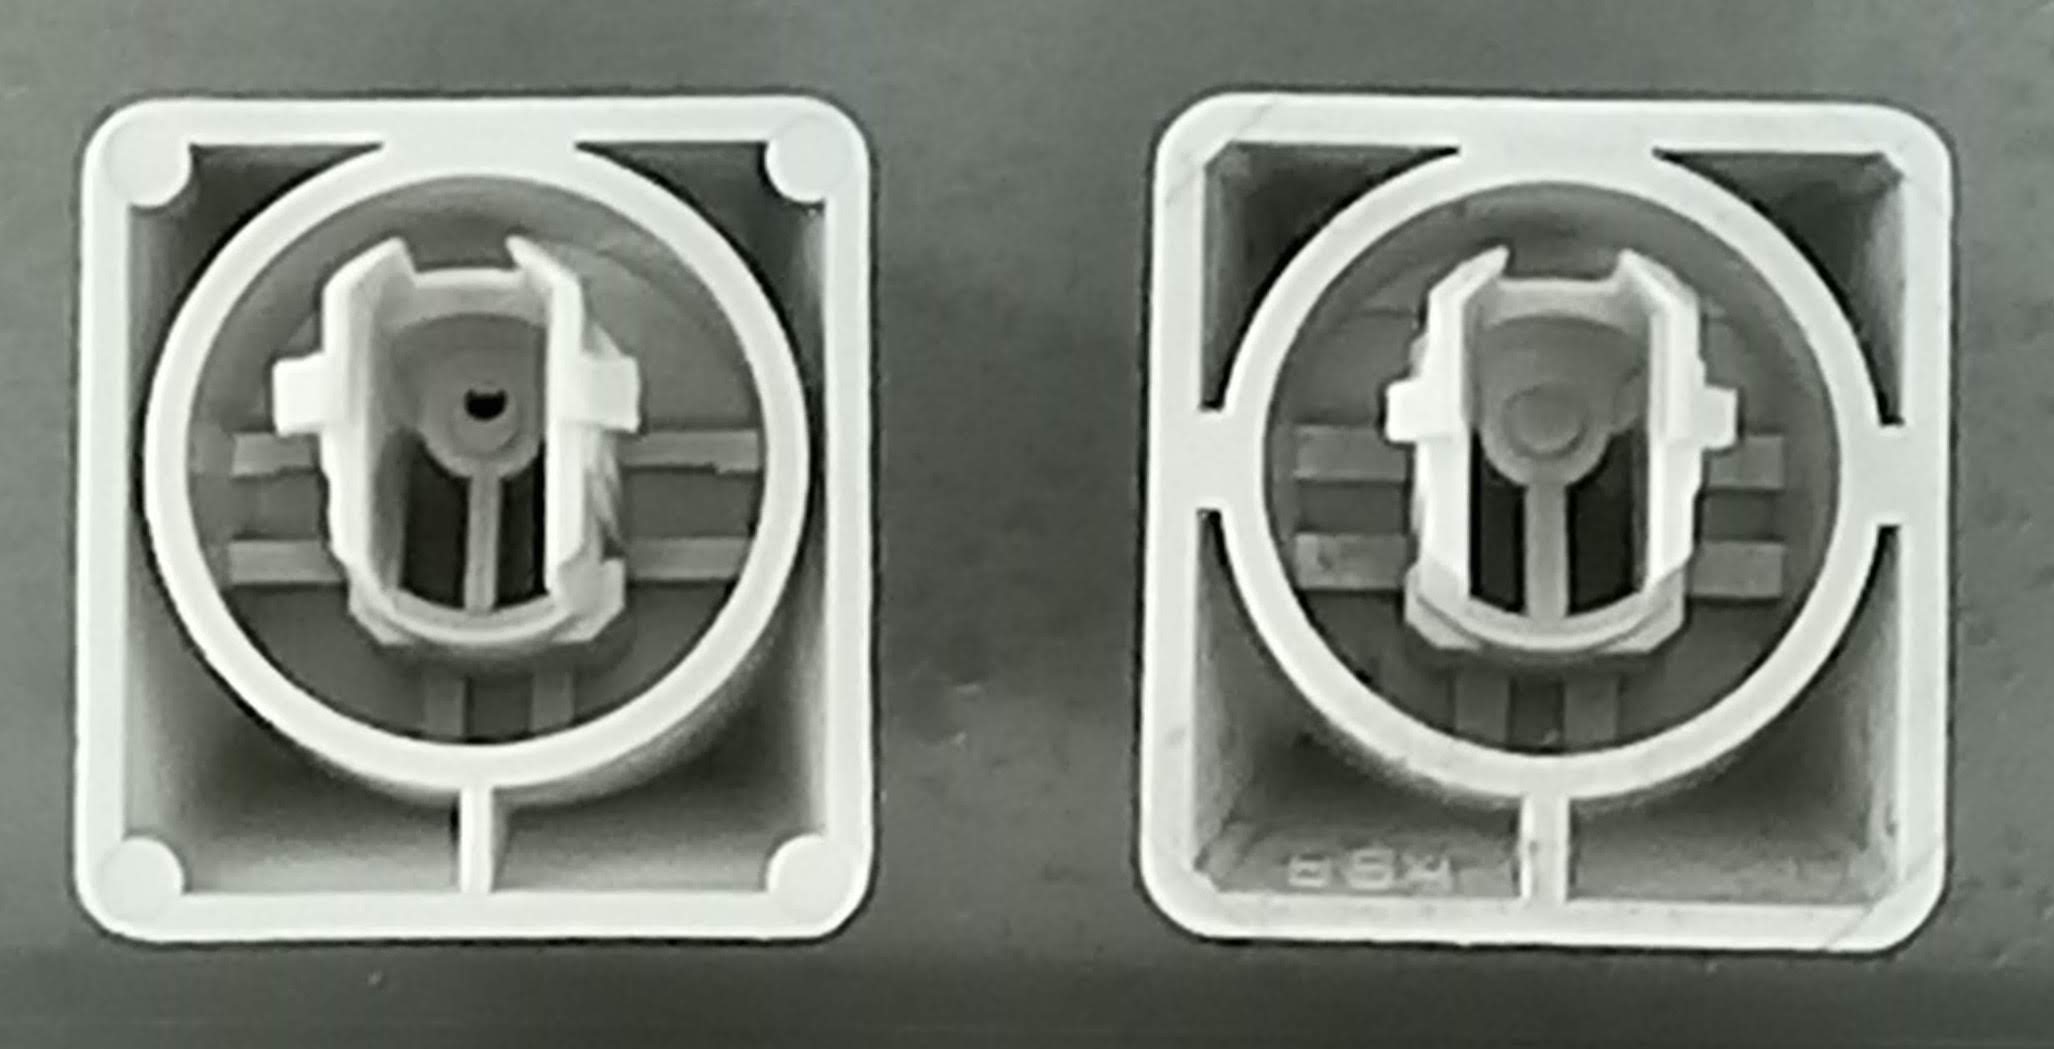 Tooling comparison: Ellipse key (left) and original F107 (right).